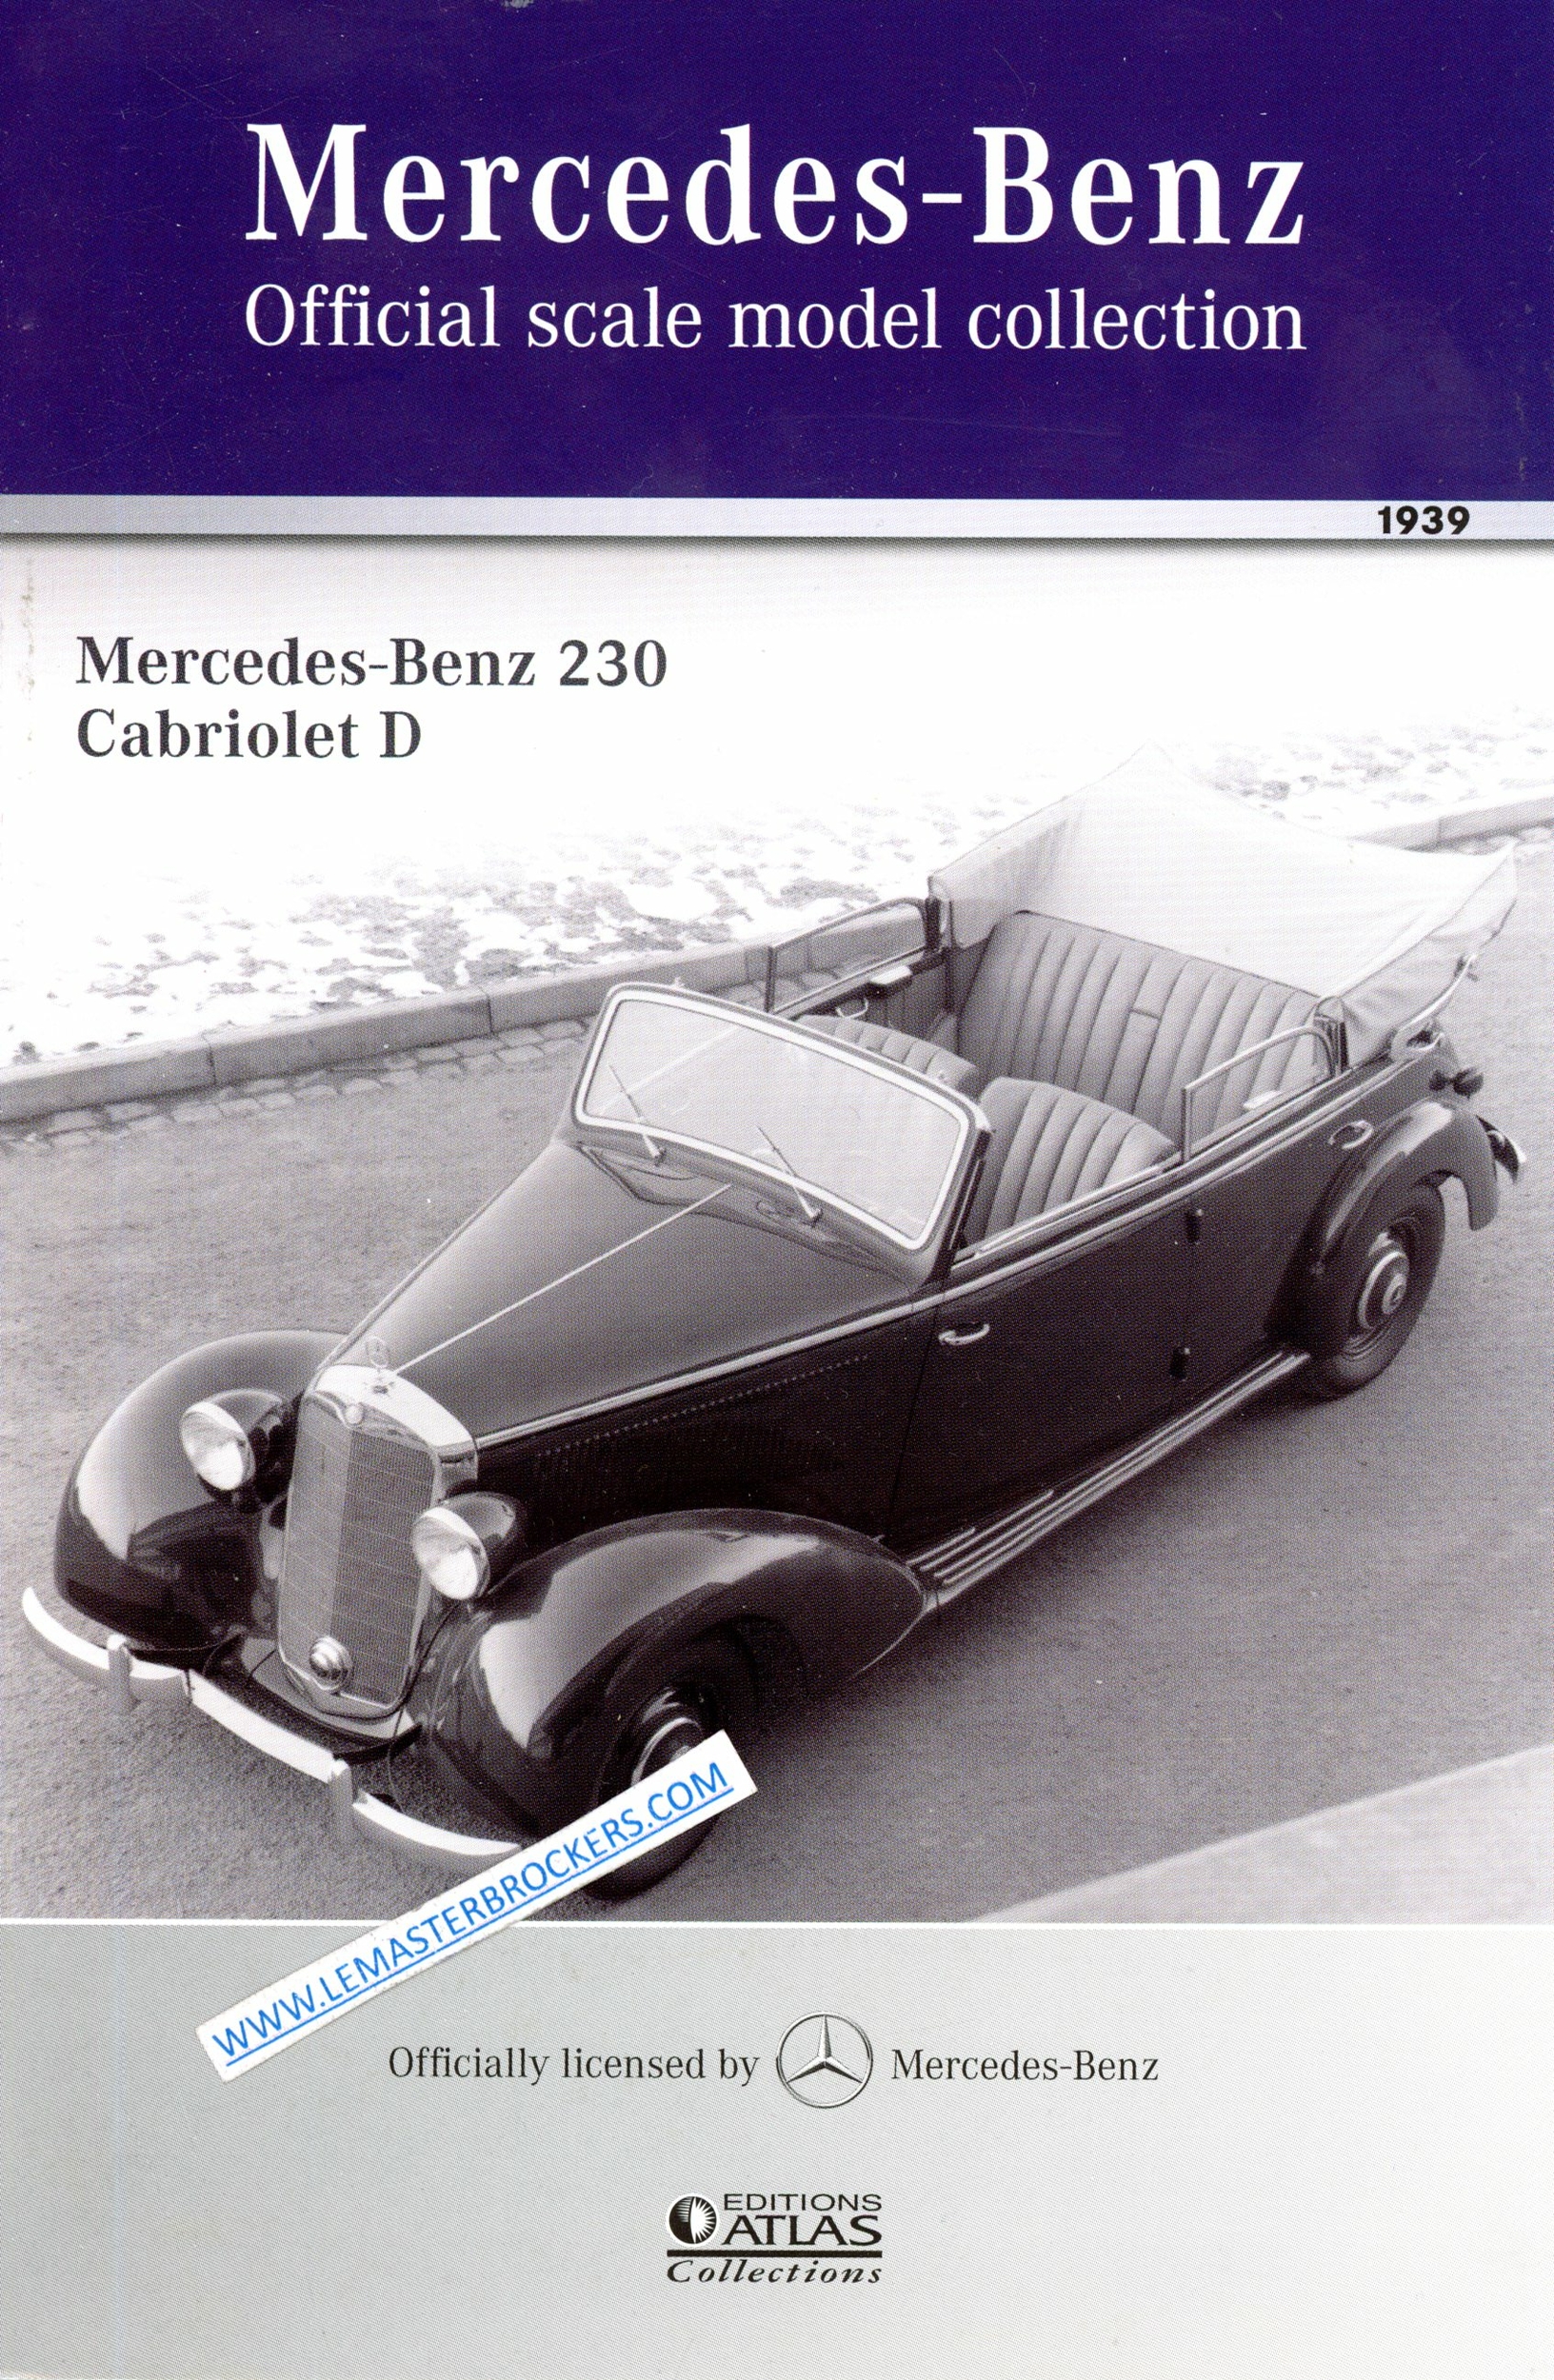 FASCICULE MERCEDES 230 CABRIOLET D 1939